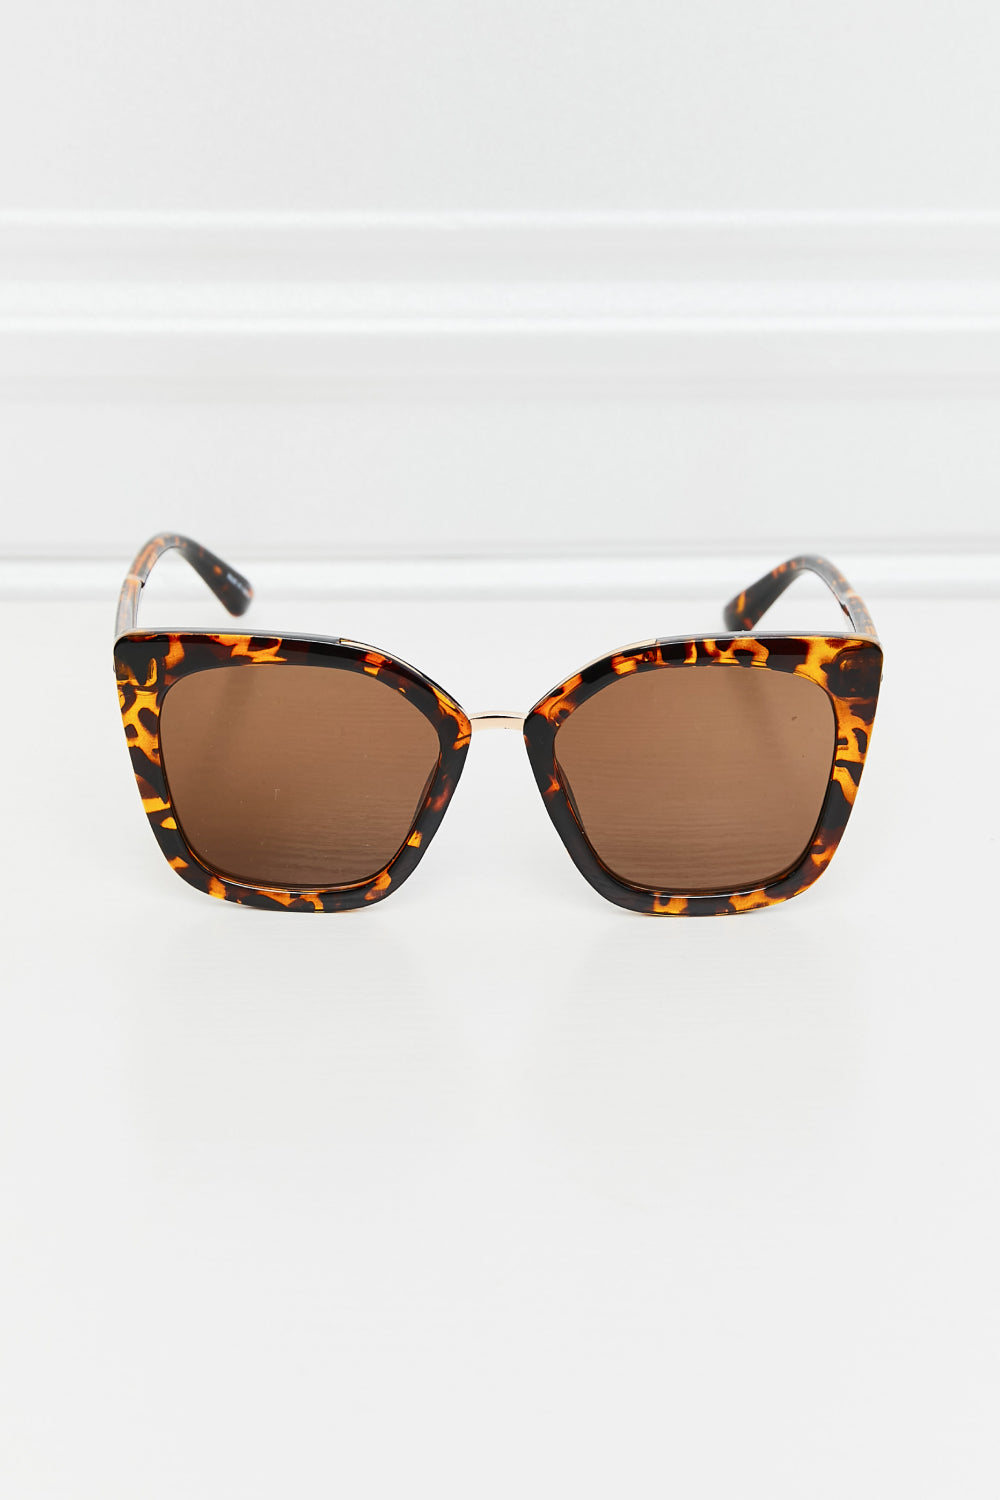 Cat Eye Full Rim Polycarbonate Sunglasses - Tigbul's Fashion